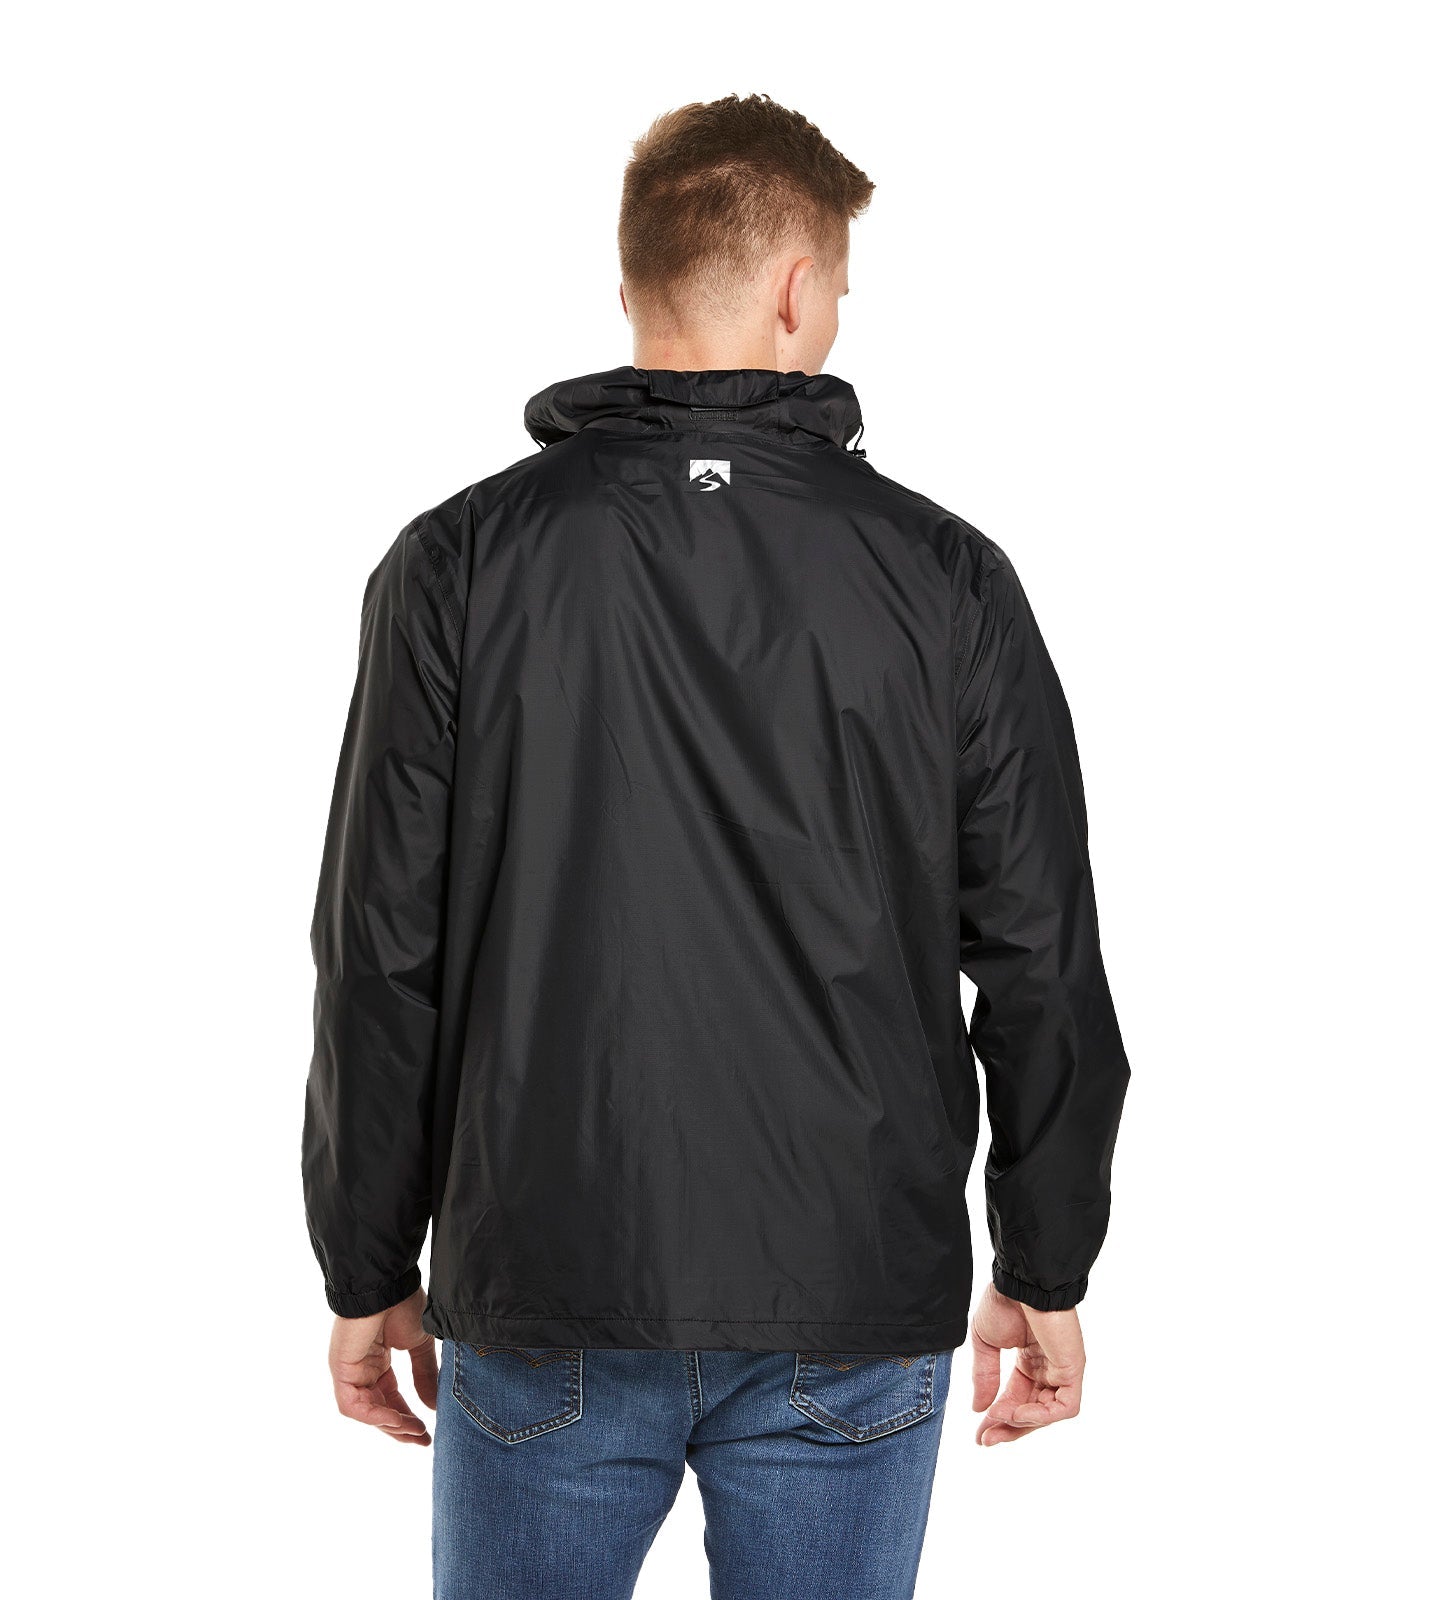 Men's Voyager Packable Rain Jacket